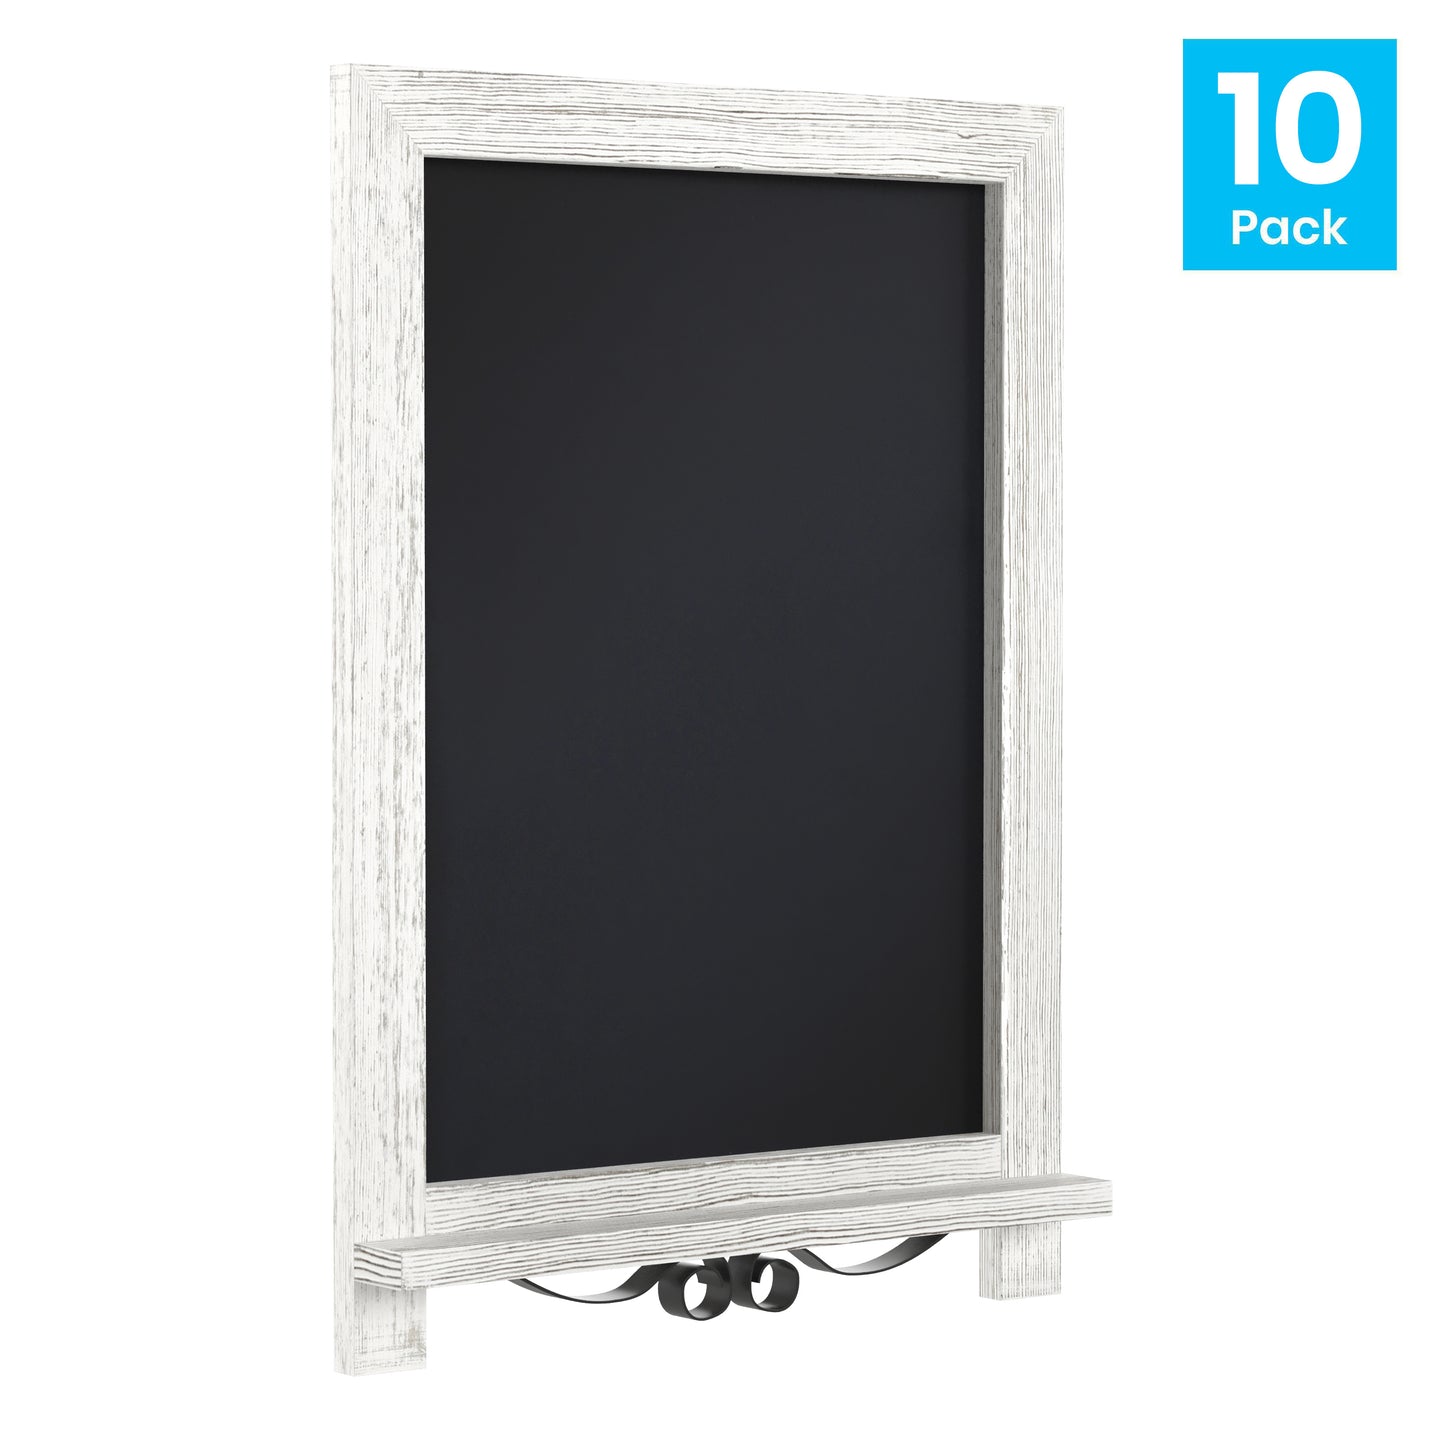 10PK Whitewash Chalkboards 10-HFKHD-GDIS-CRE8-522315-GG